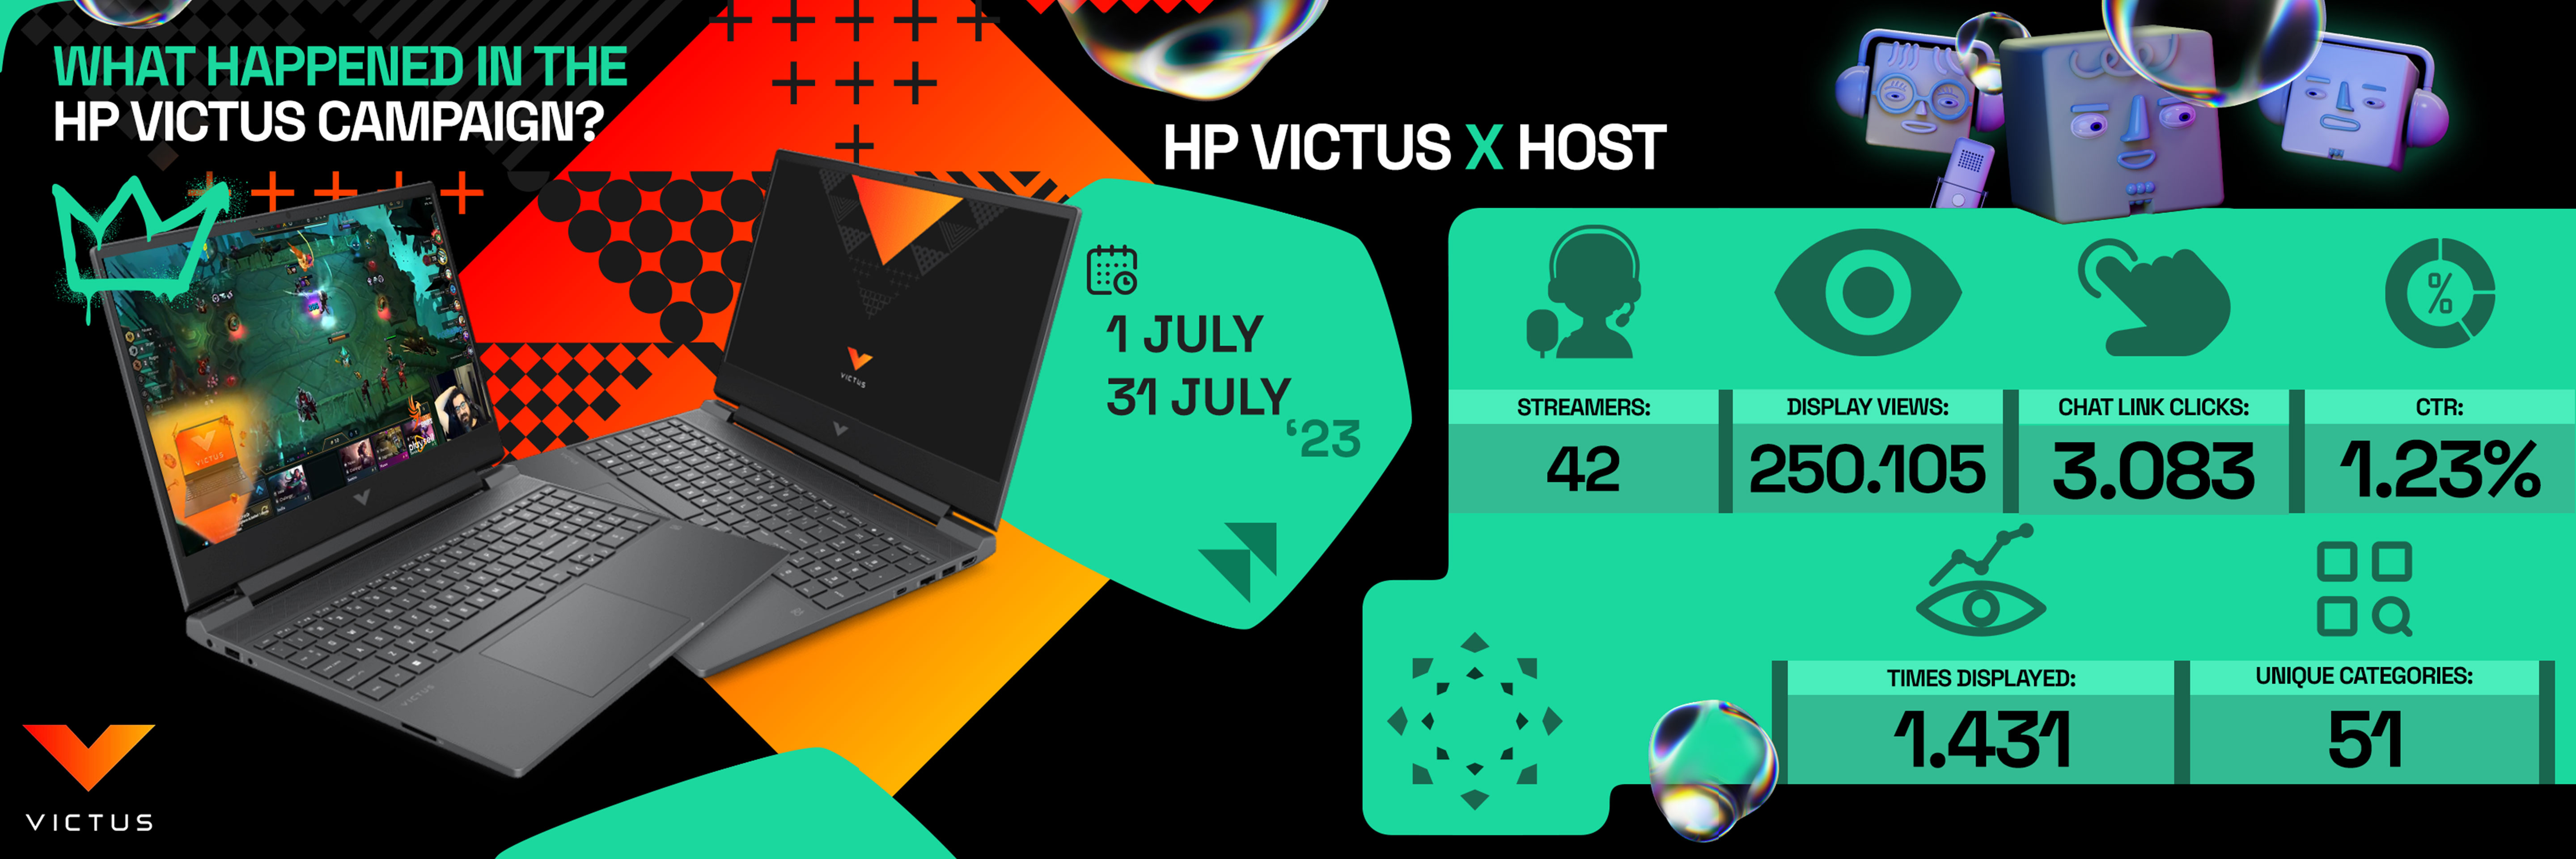 hp-victus-host.jpg